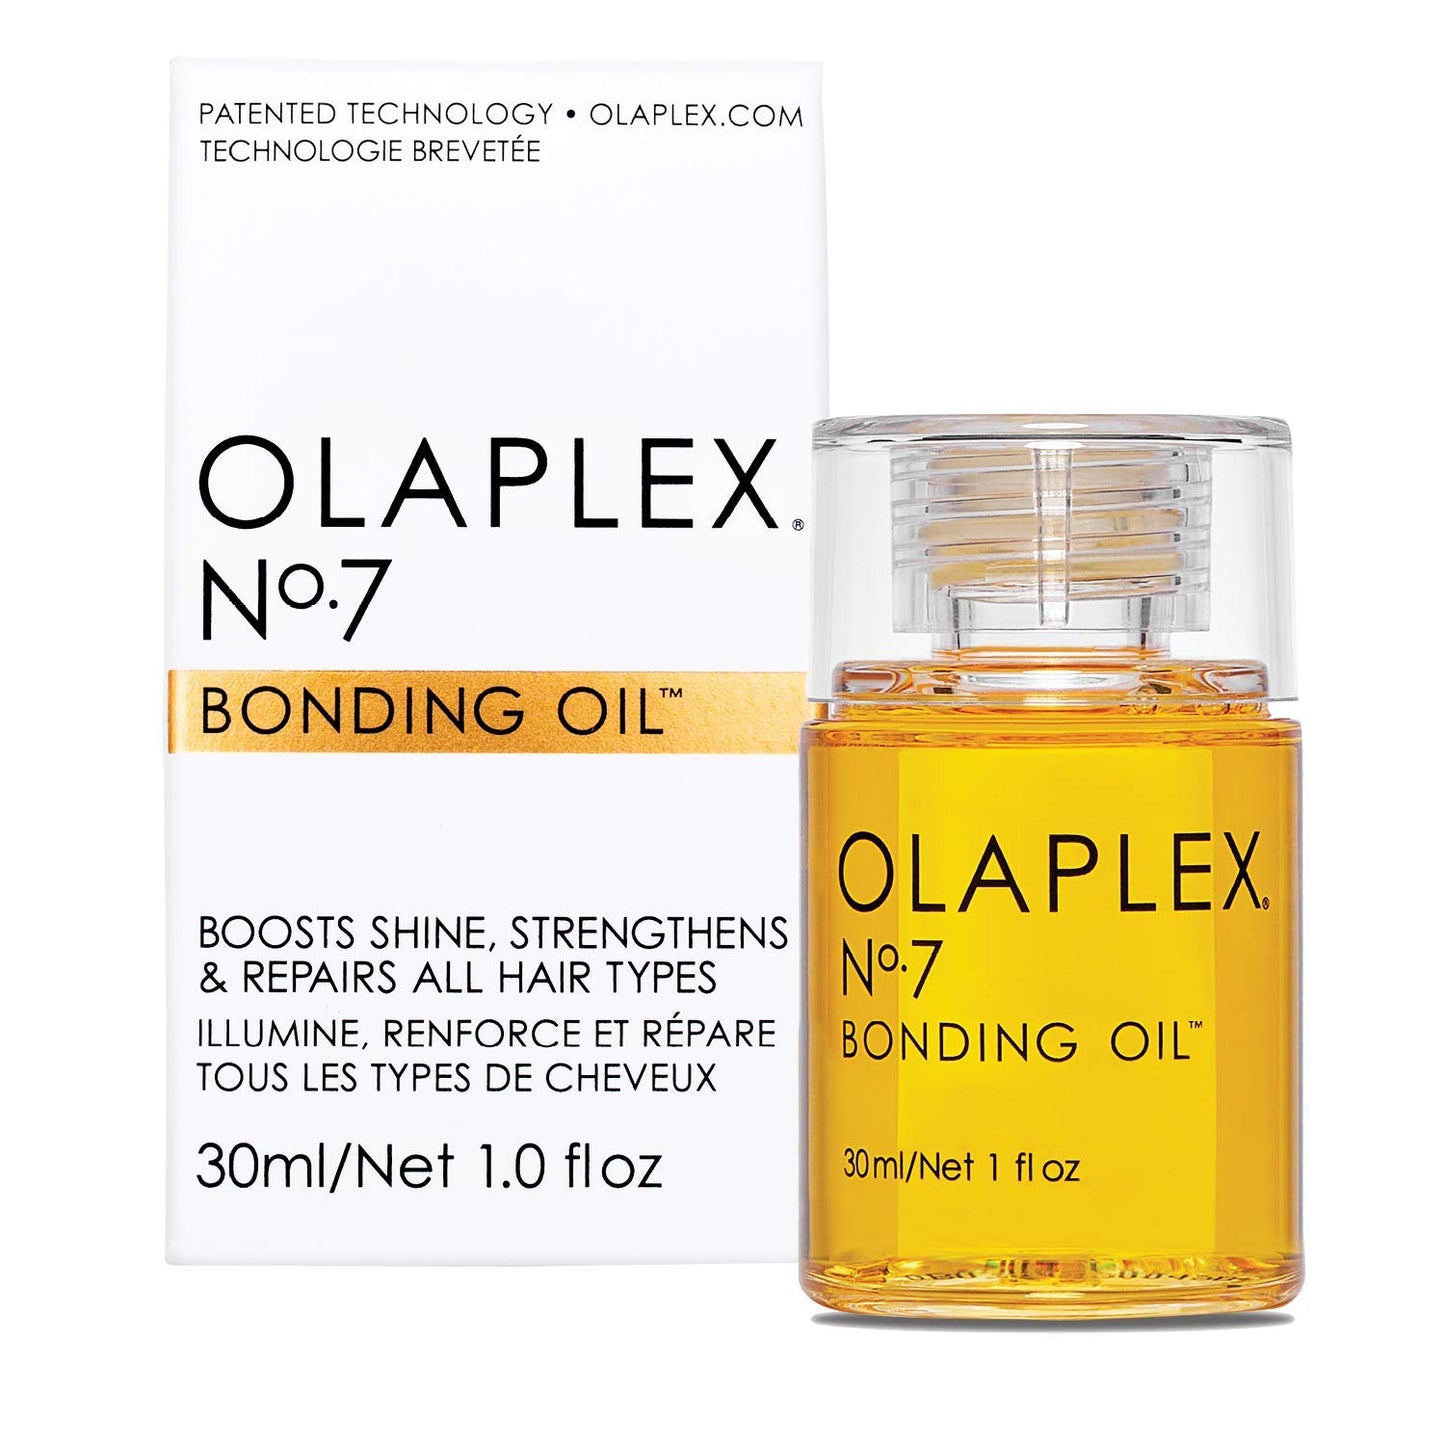 OLAPLEX 7 - BONDING OIL